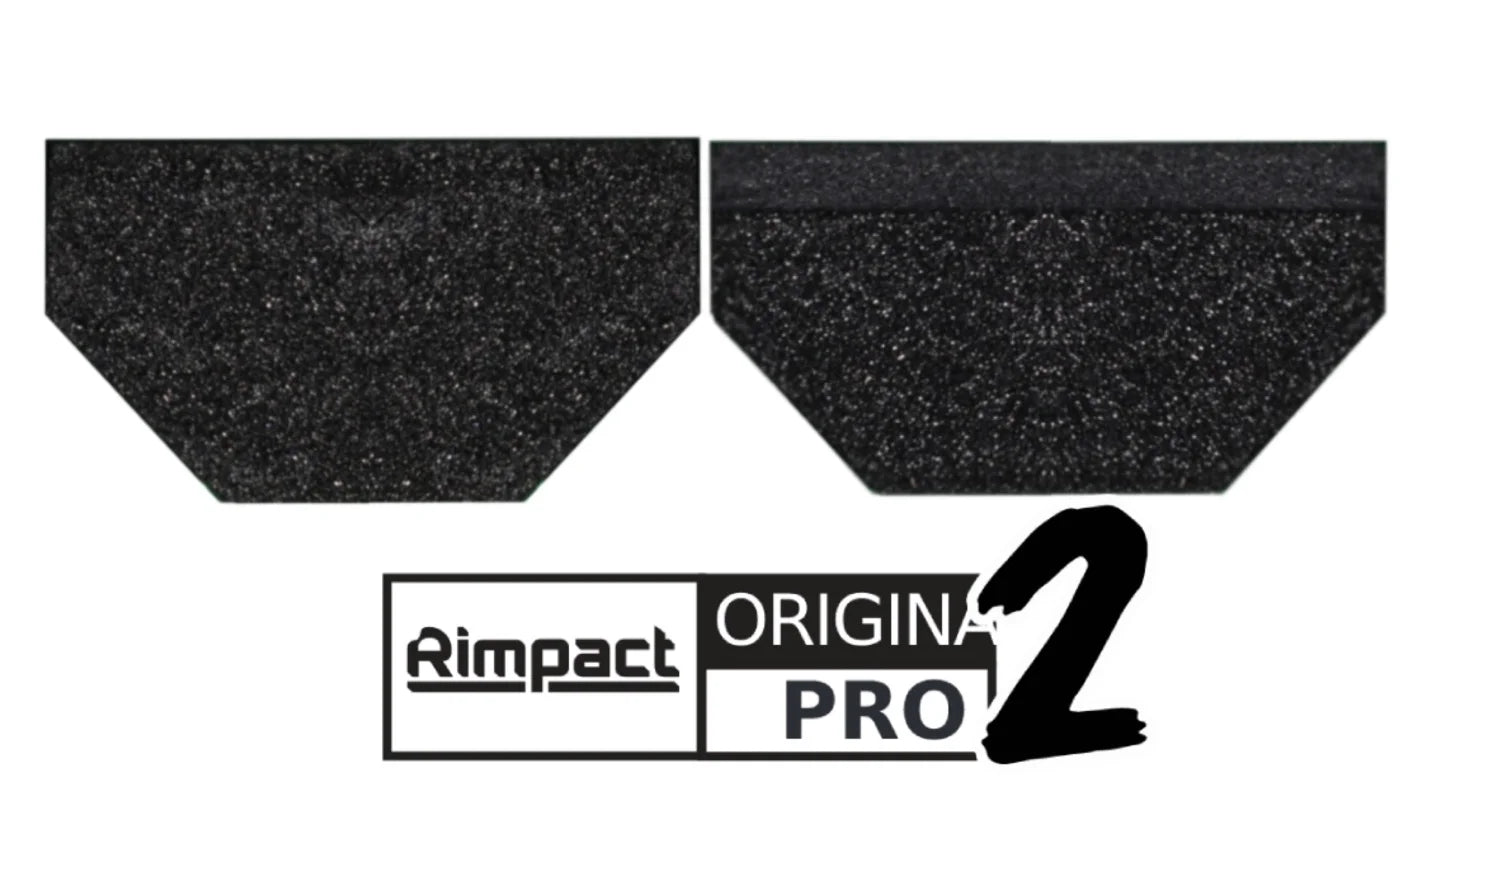 Rimpact Pro/Original V2 Mix with Valves